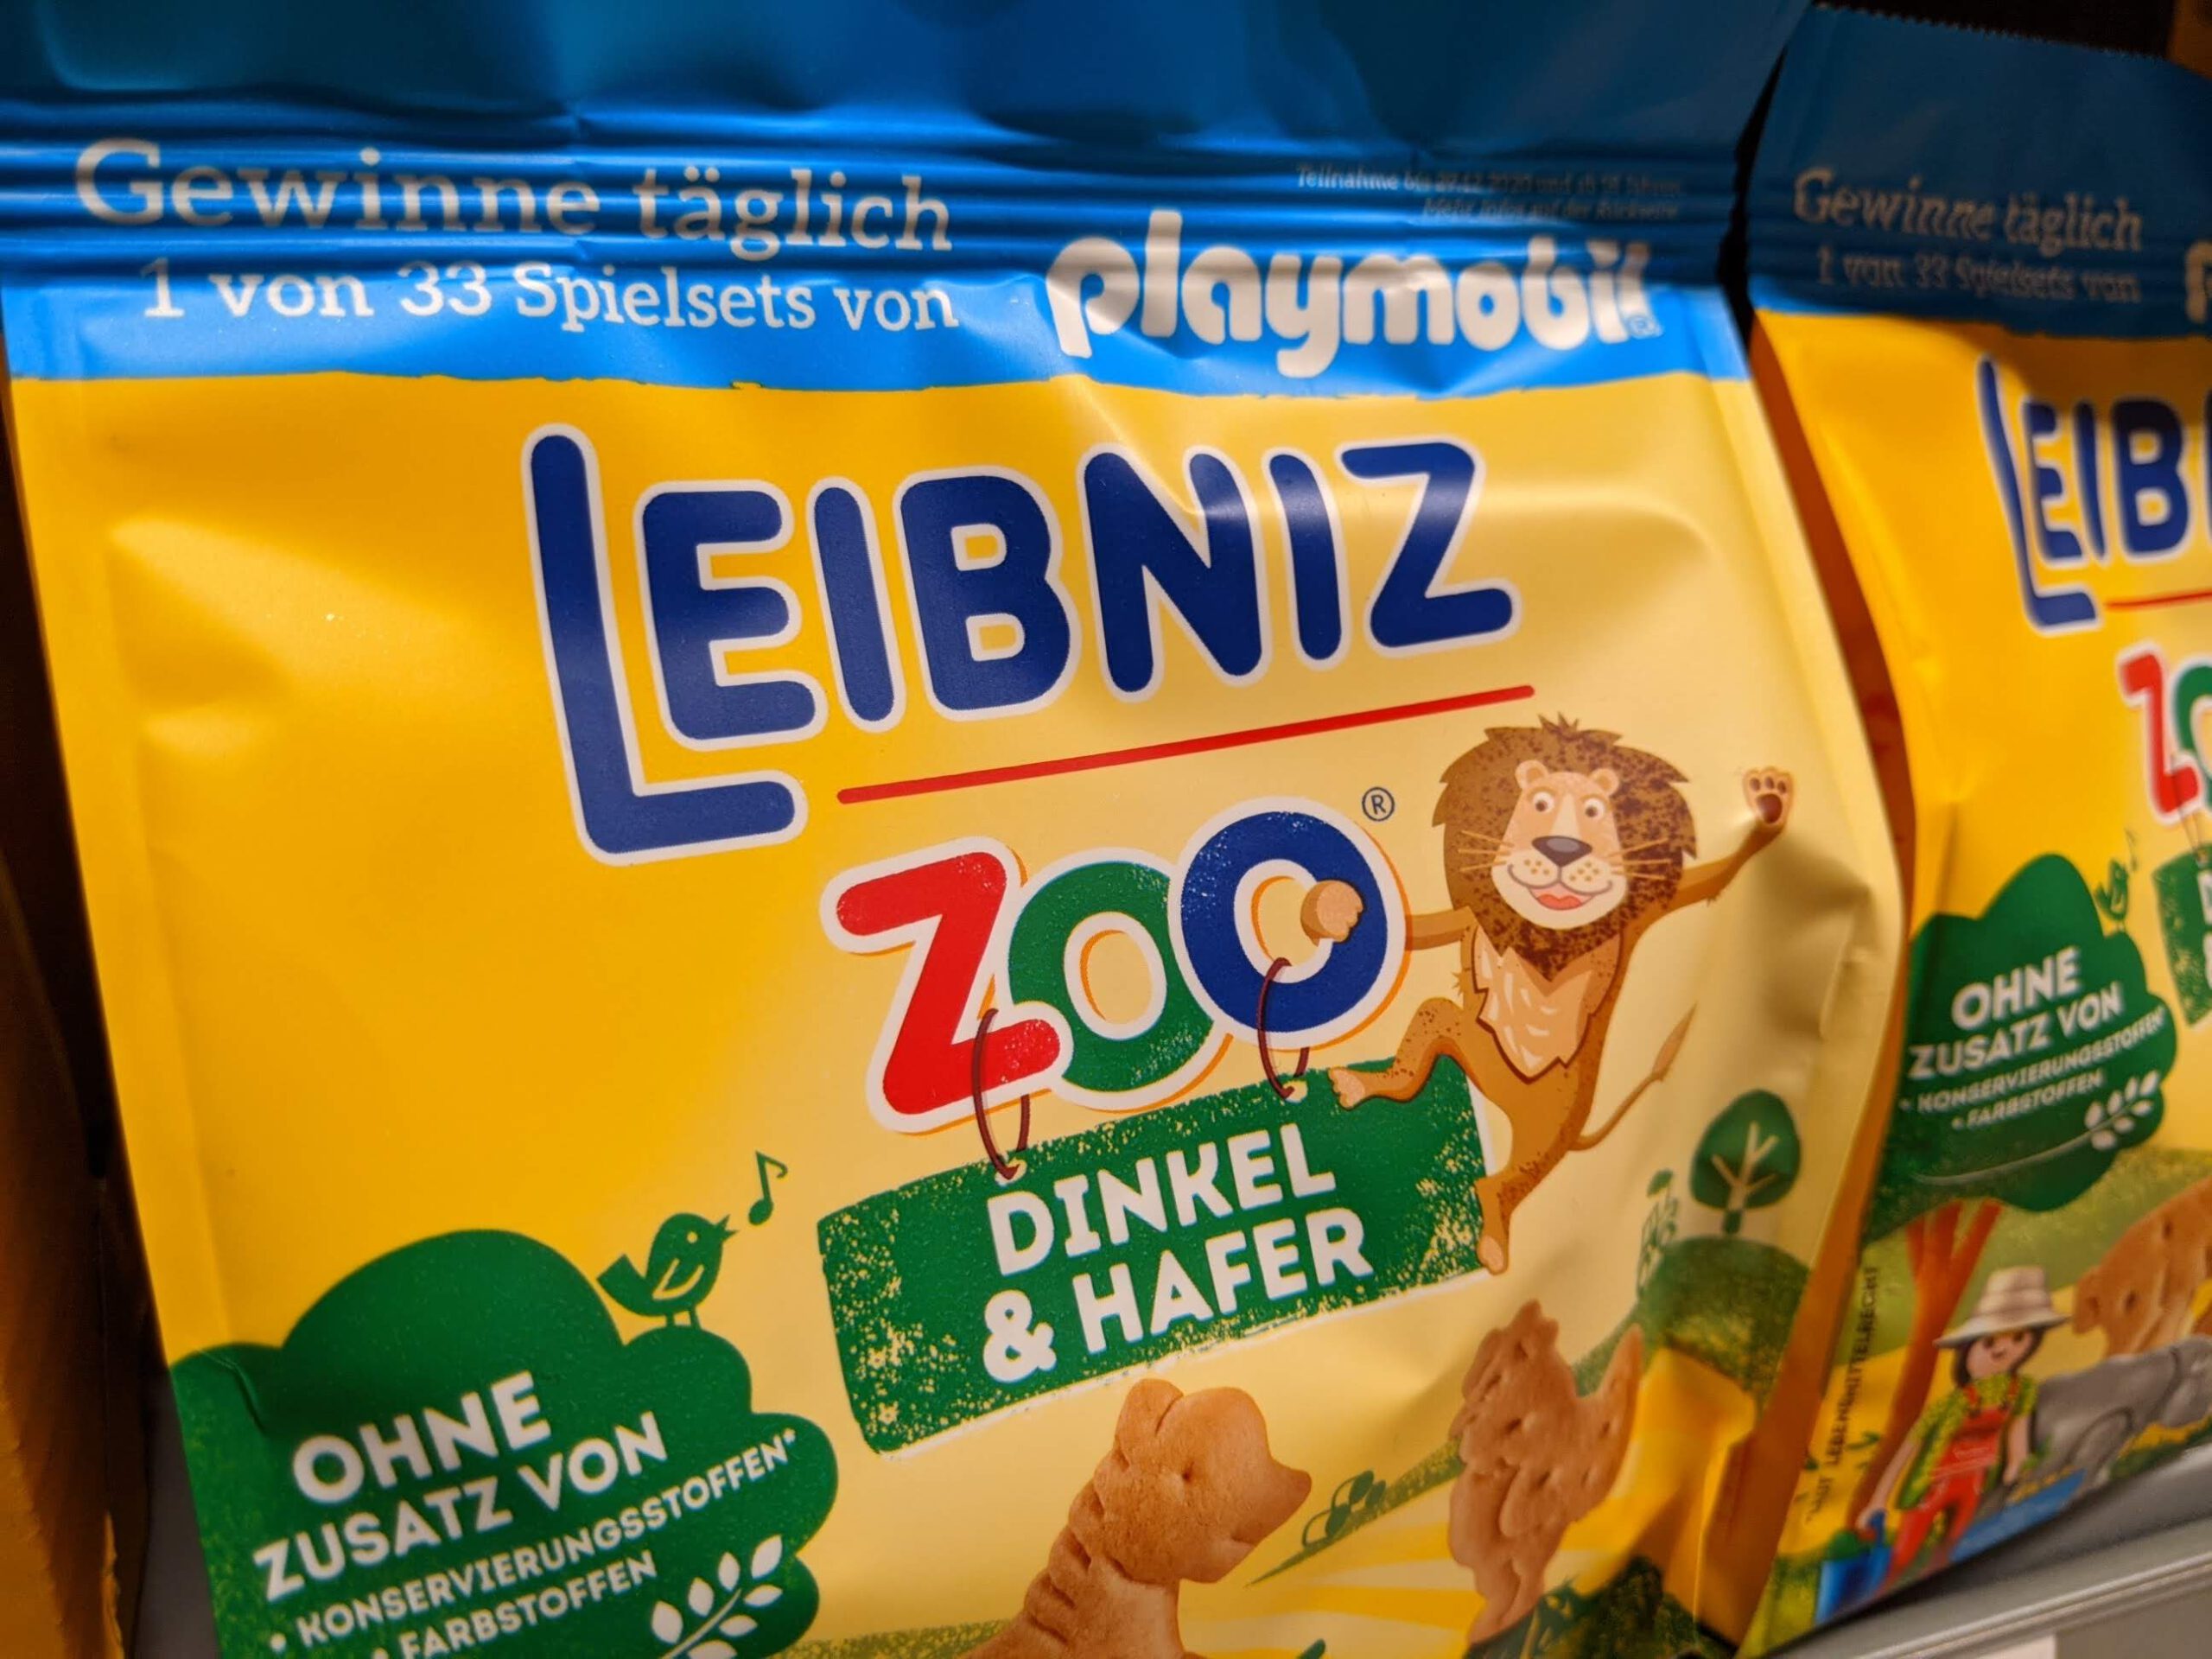 Leibniz Playmobil Zoo Spielesets gewinnen